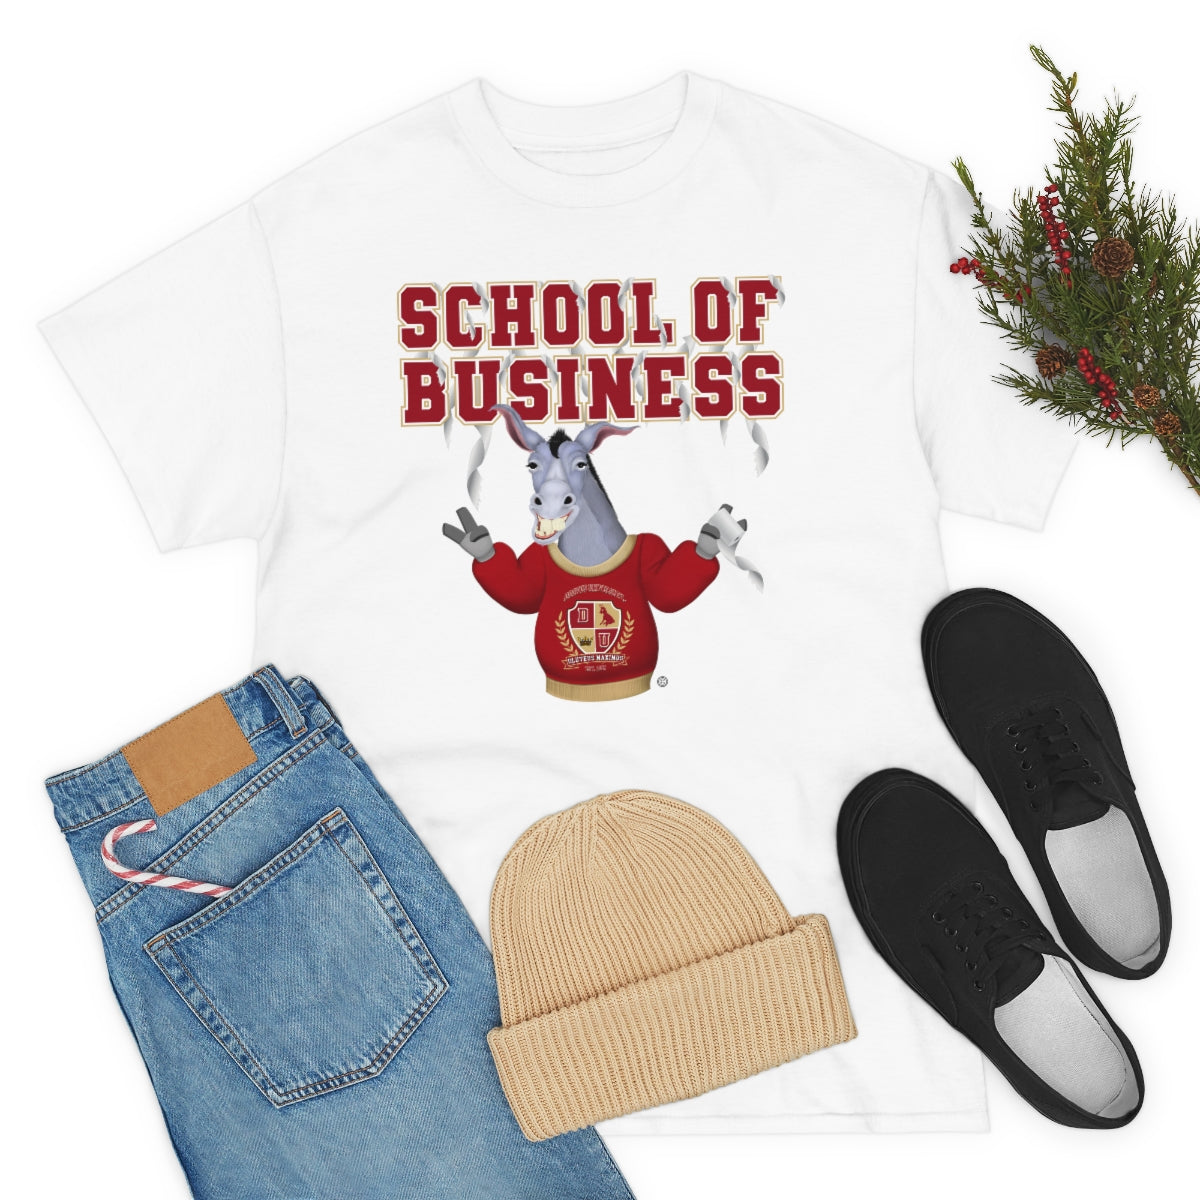 School of Business Unisex T-Shirt Funny Shirt Gag Gift Idea